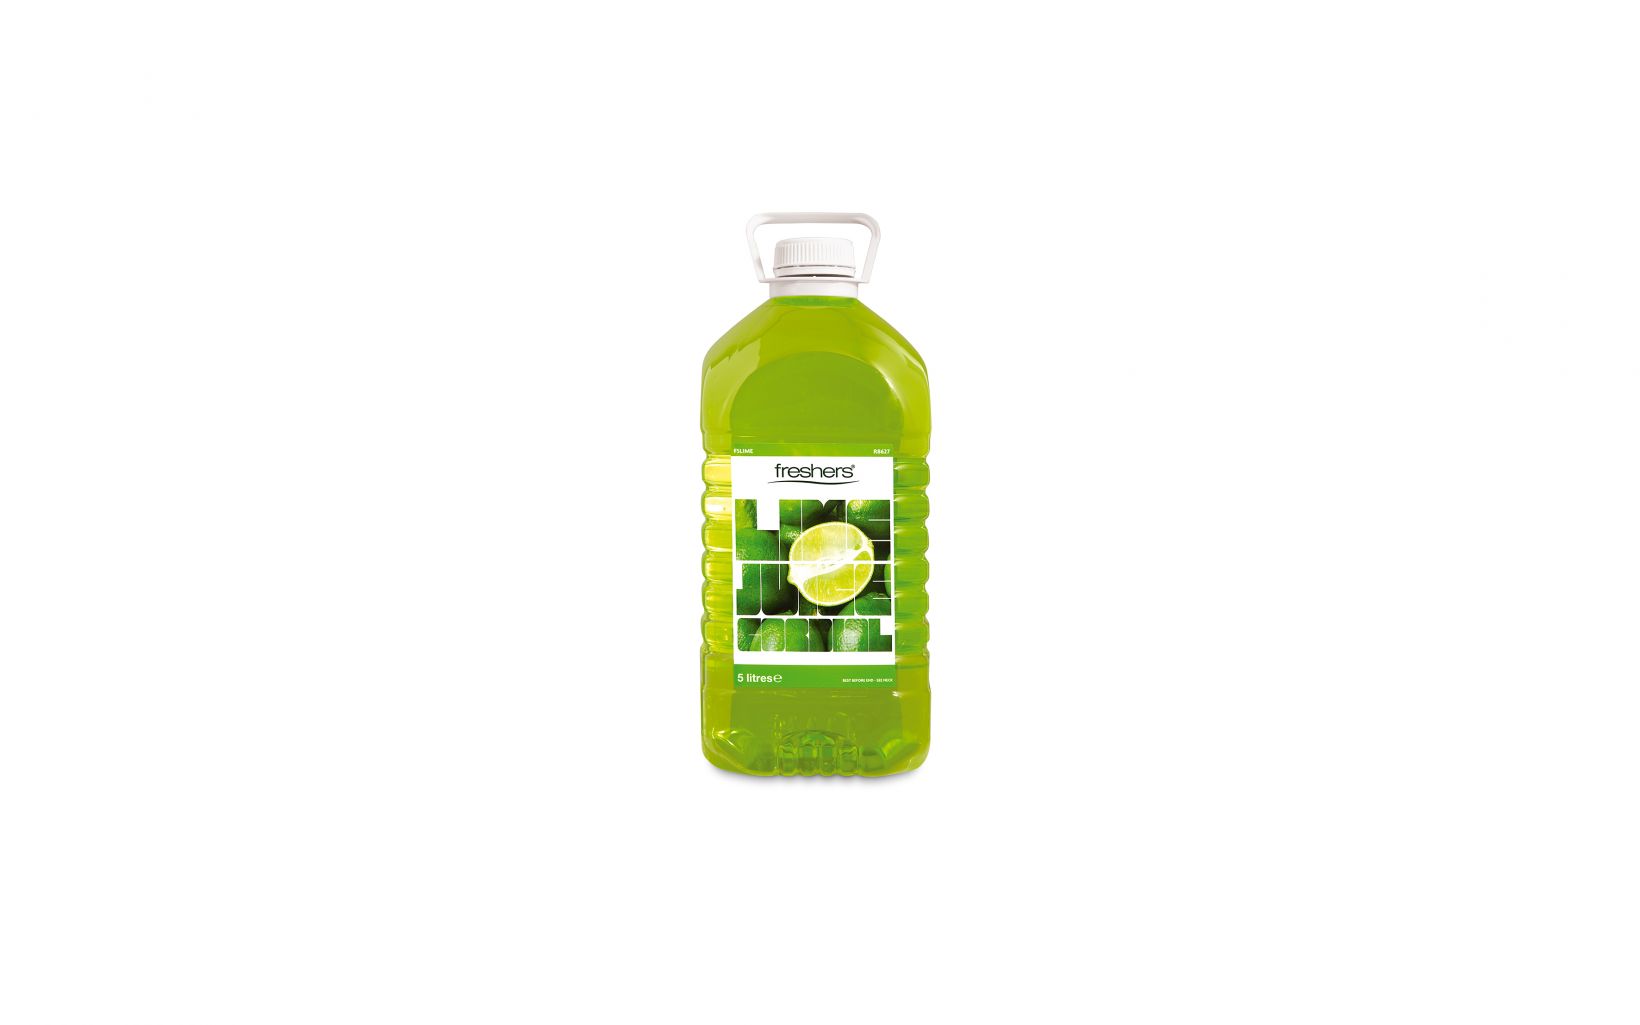 5958 F5lime Freshers 5l Lime Juice Aug 20 Edit